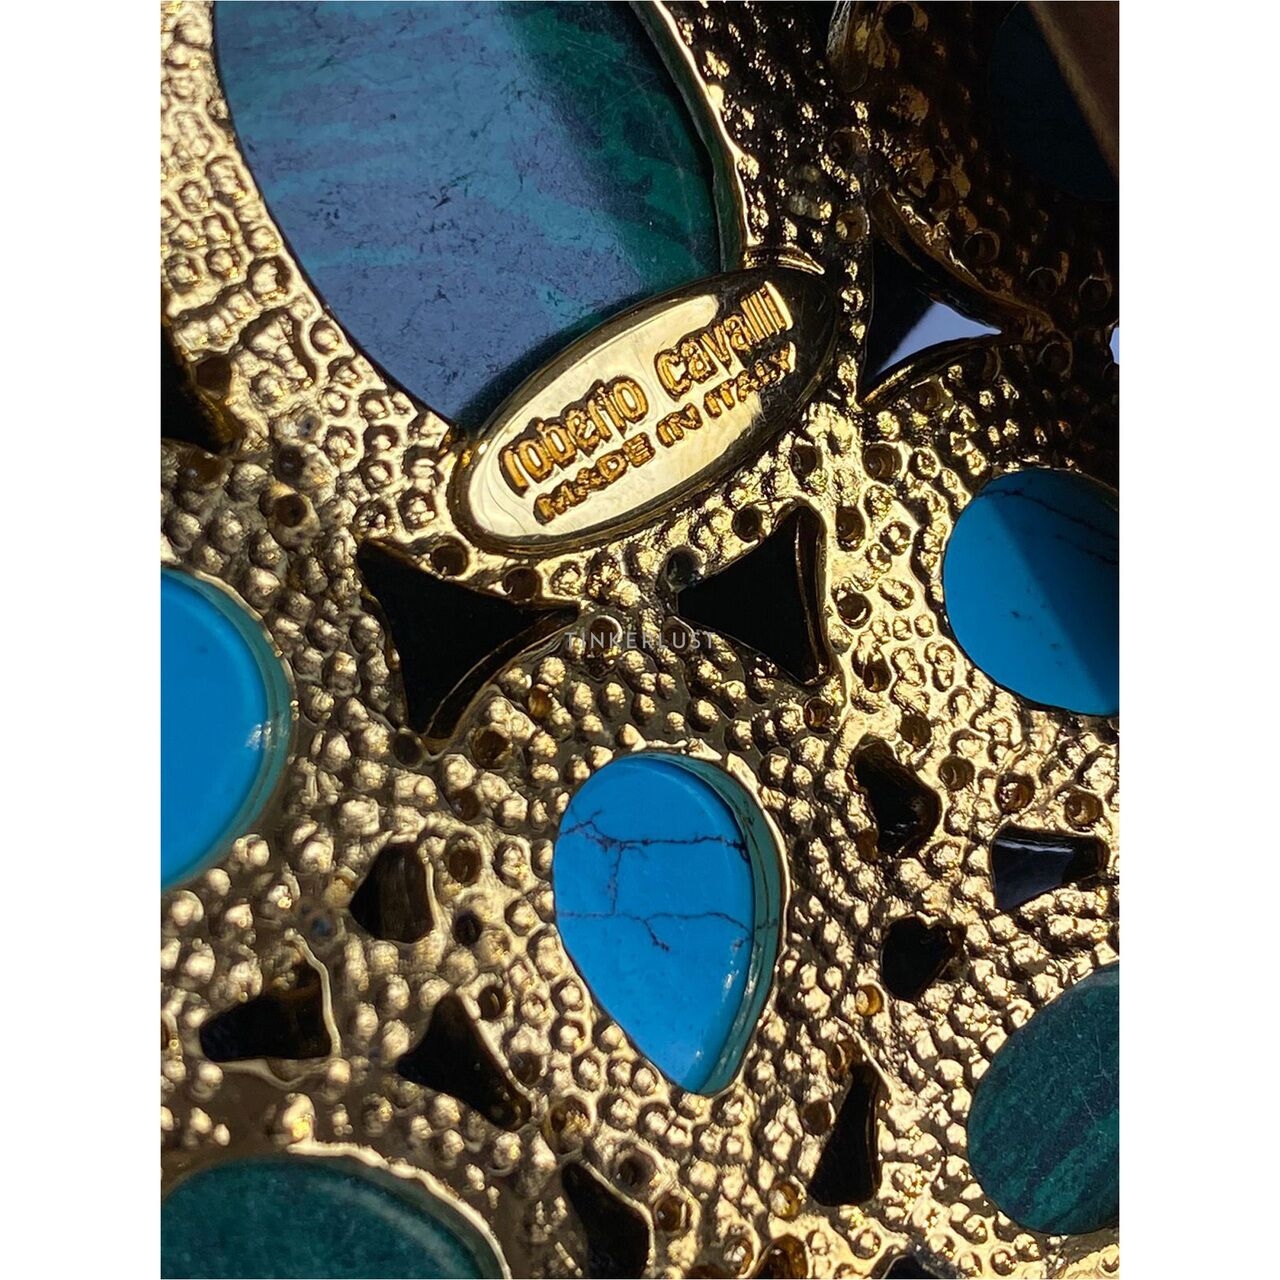 Roberto Cavalli Green Braided Fabric Embellished Belt